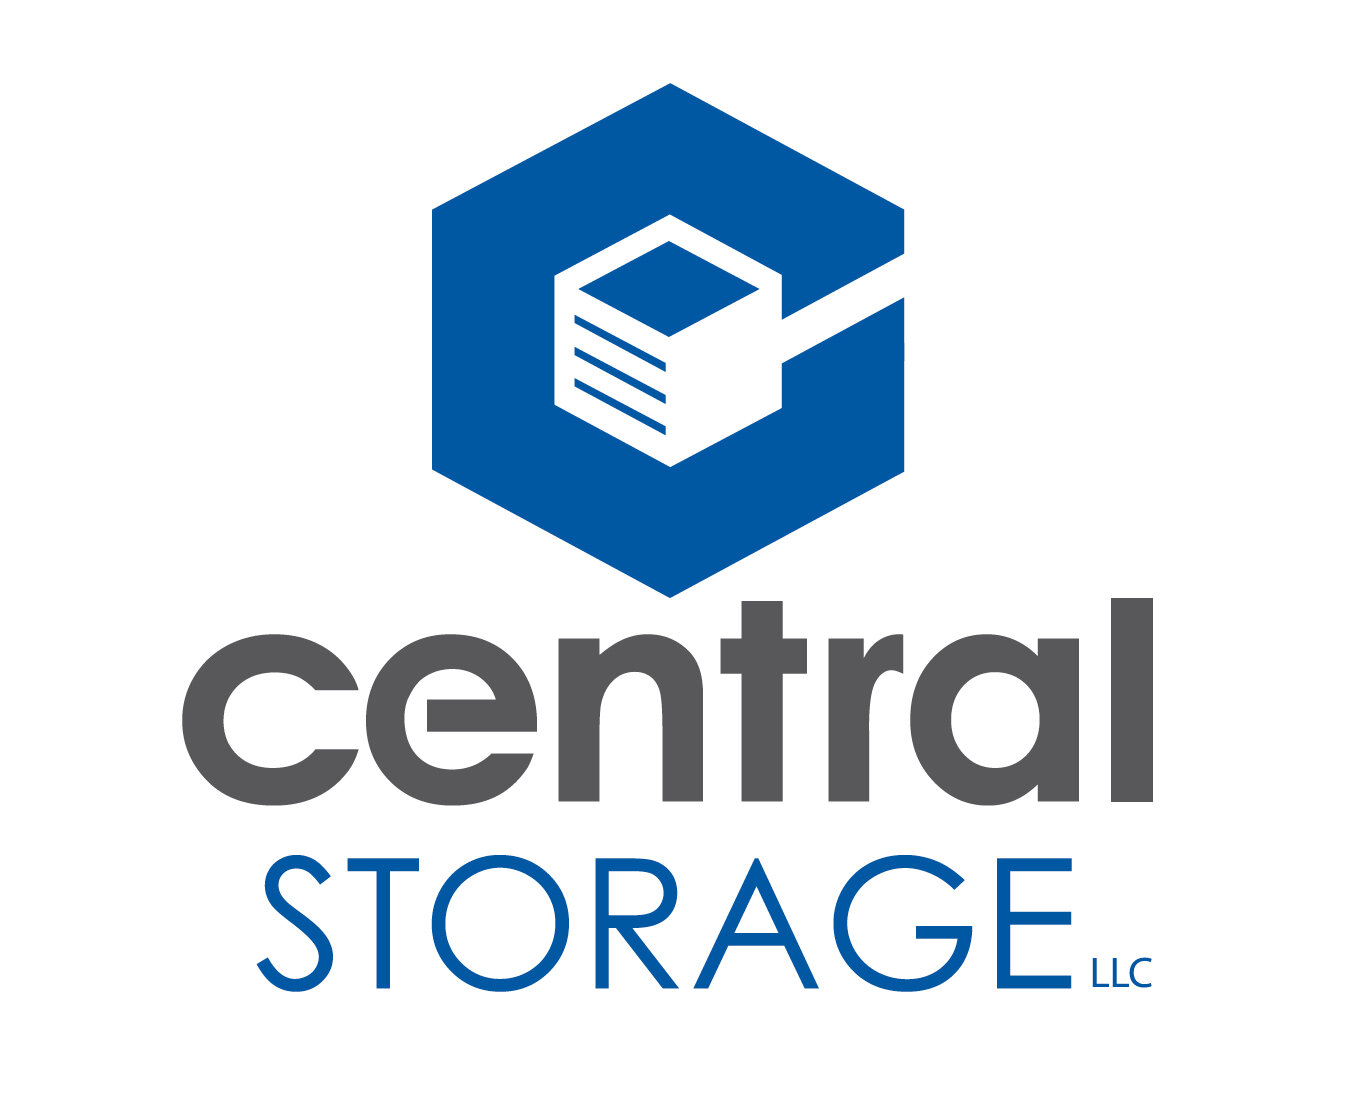 central storage logo.jpg